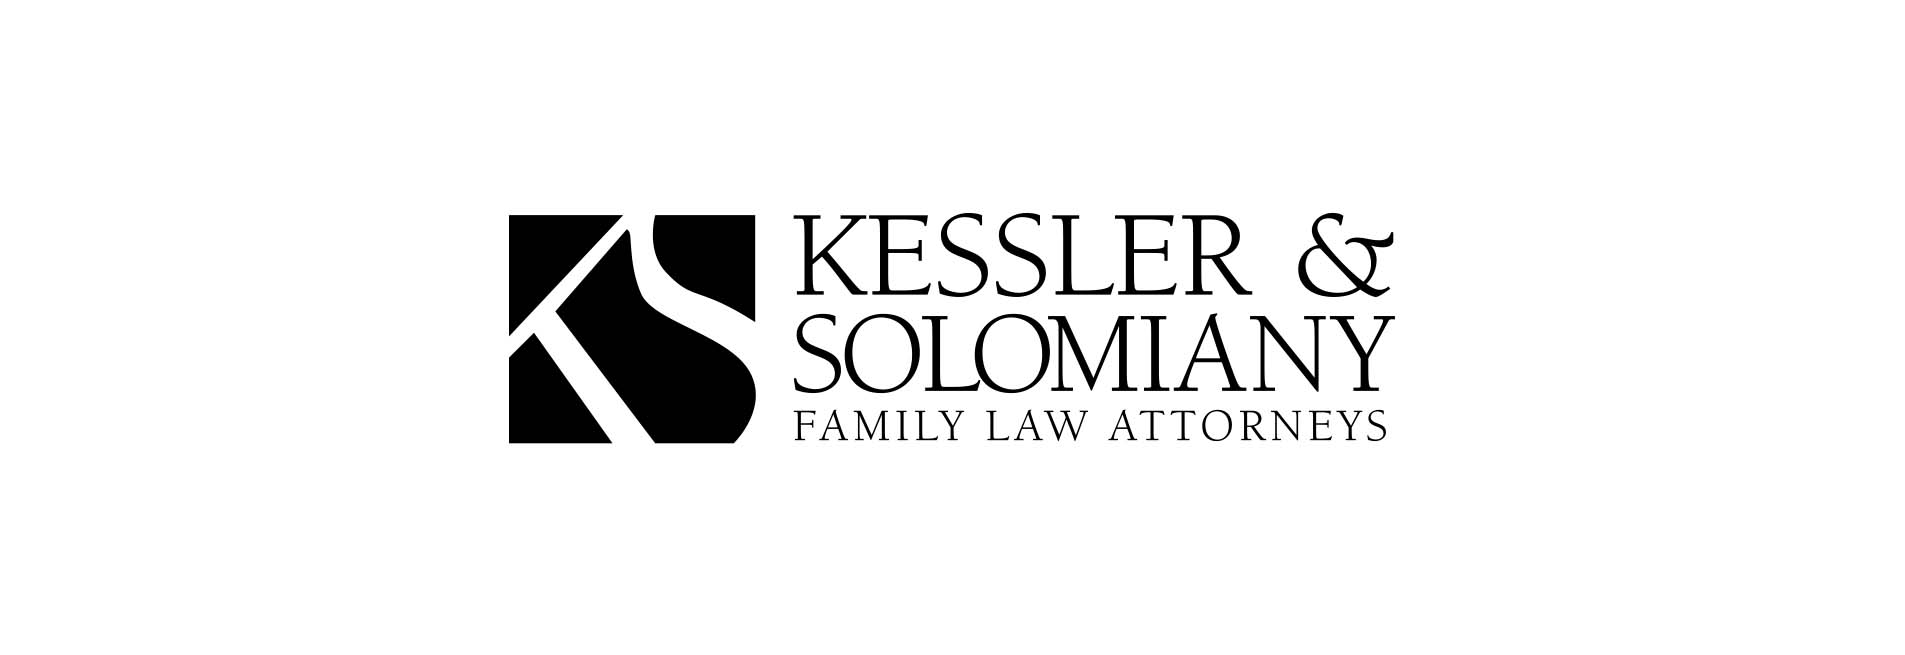 Kessler & Solomiany Family Law Attorneys Logo